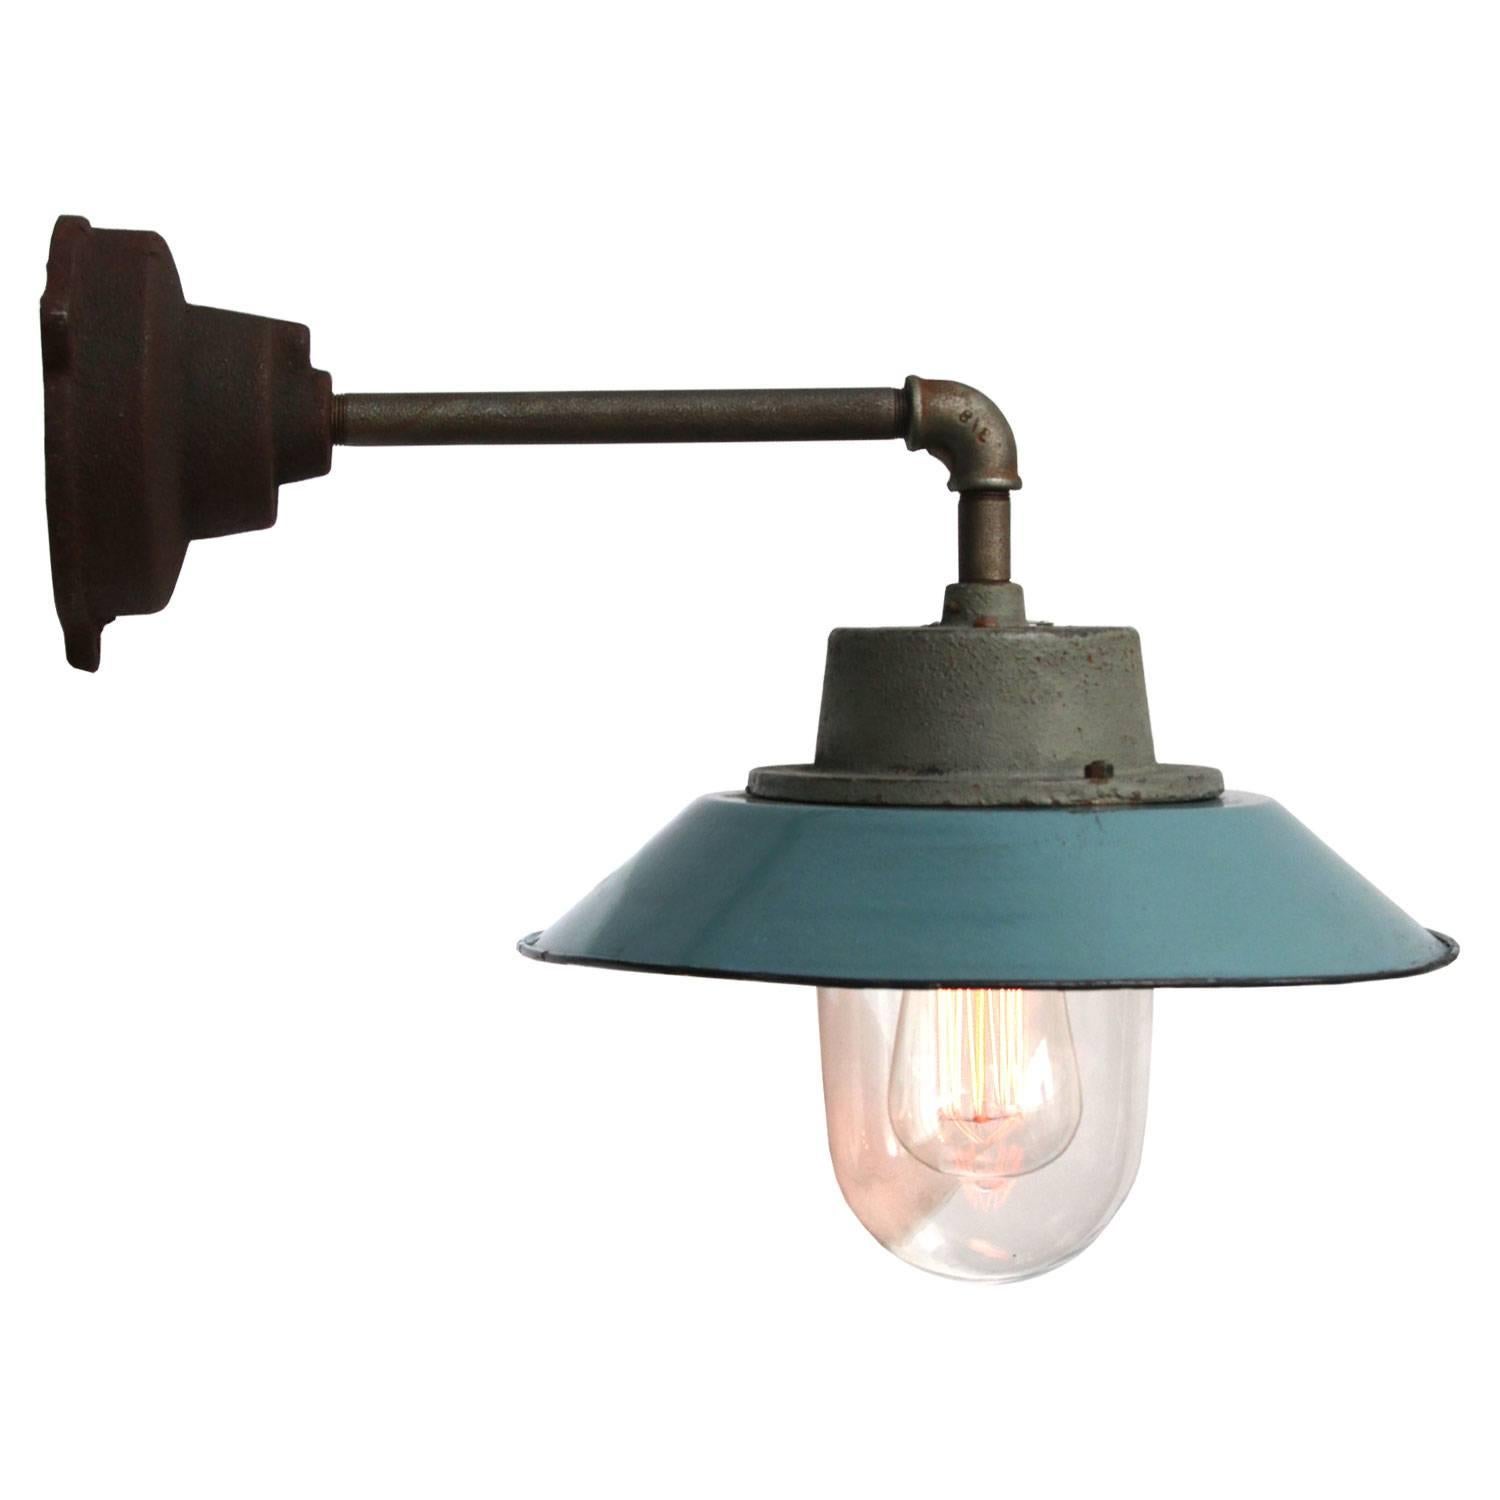 Light Blue Enamel Vintage Industrial Wall Lamp Cast Iron Arm Clear Glass